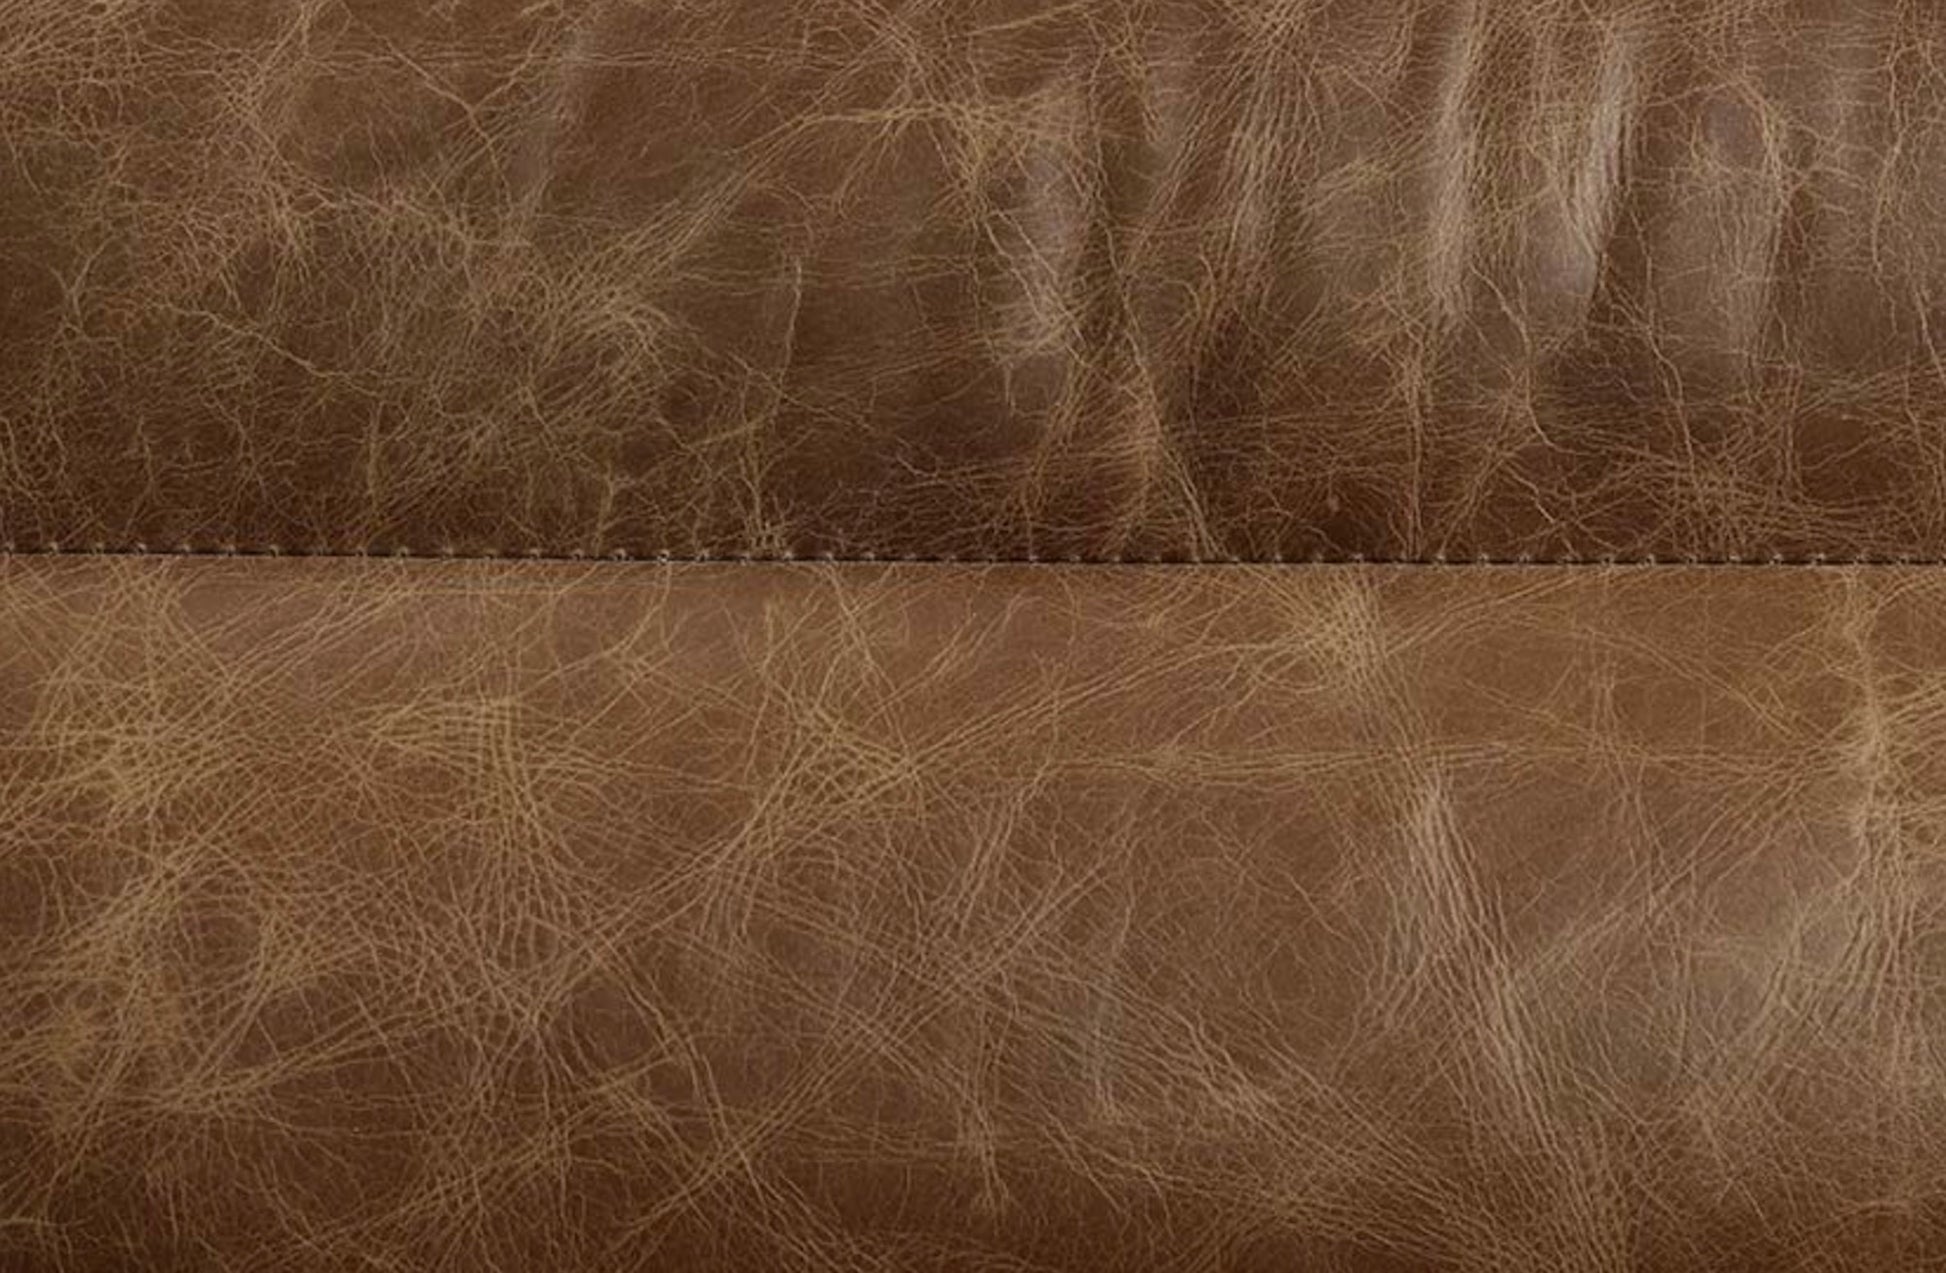 Rafer Modern Brown Top Grain Leather Sofa